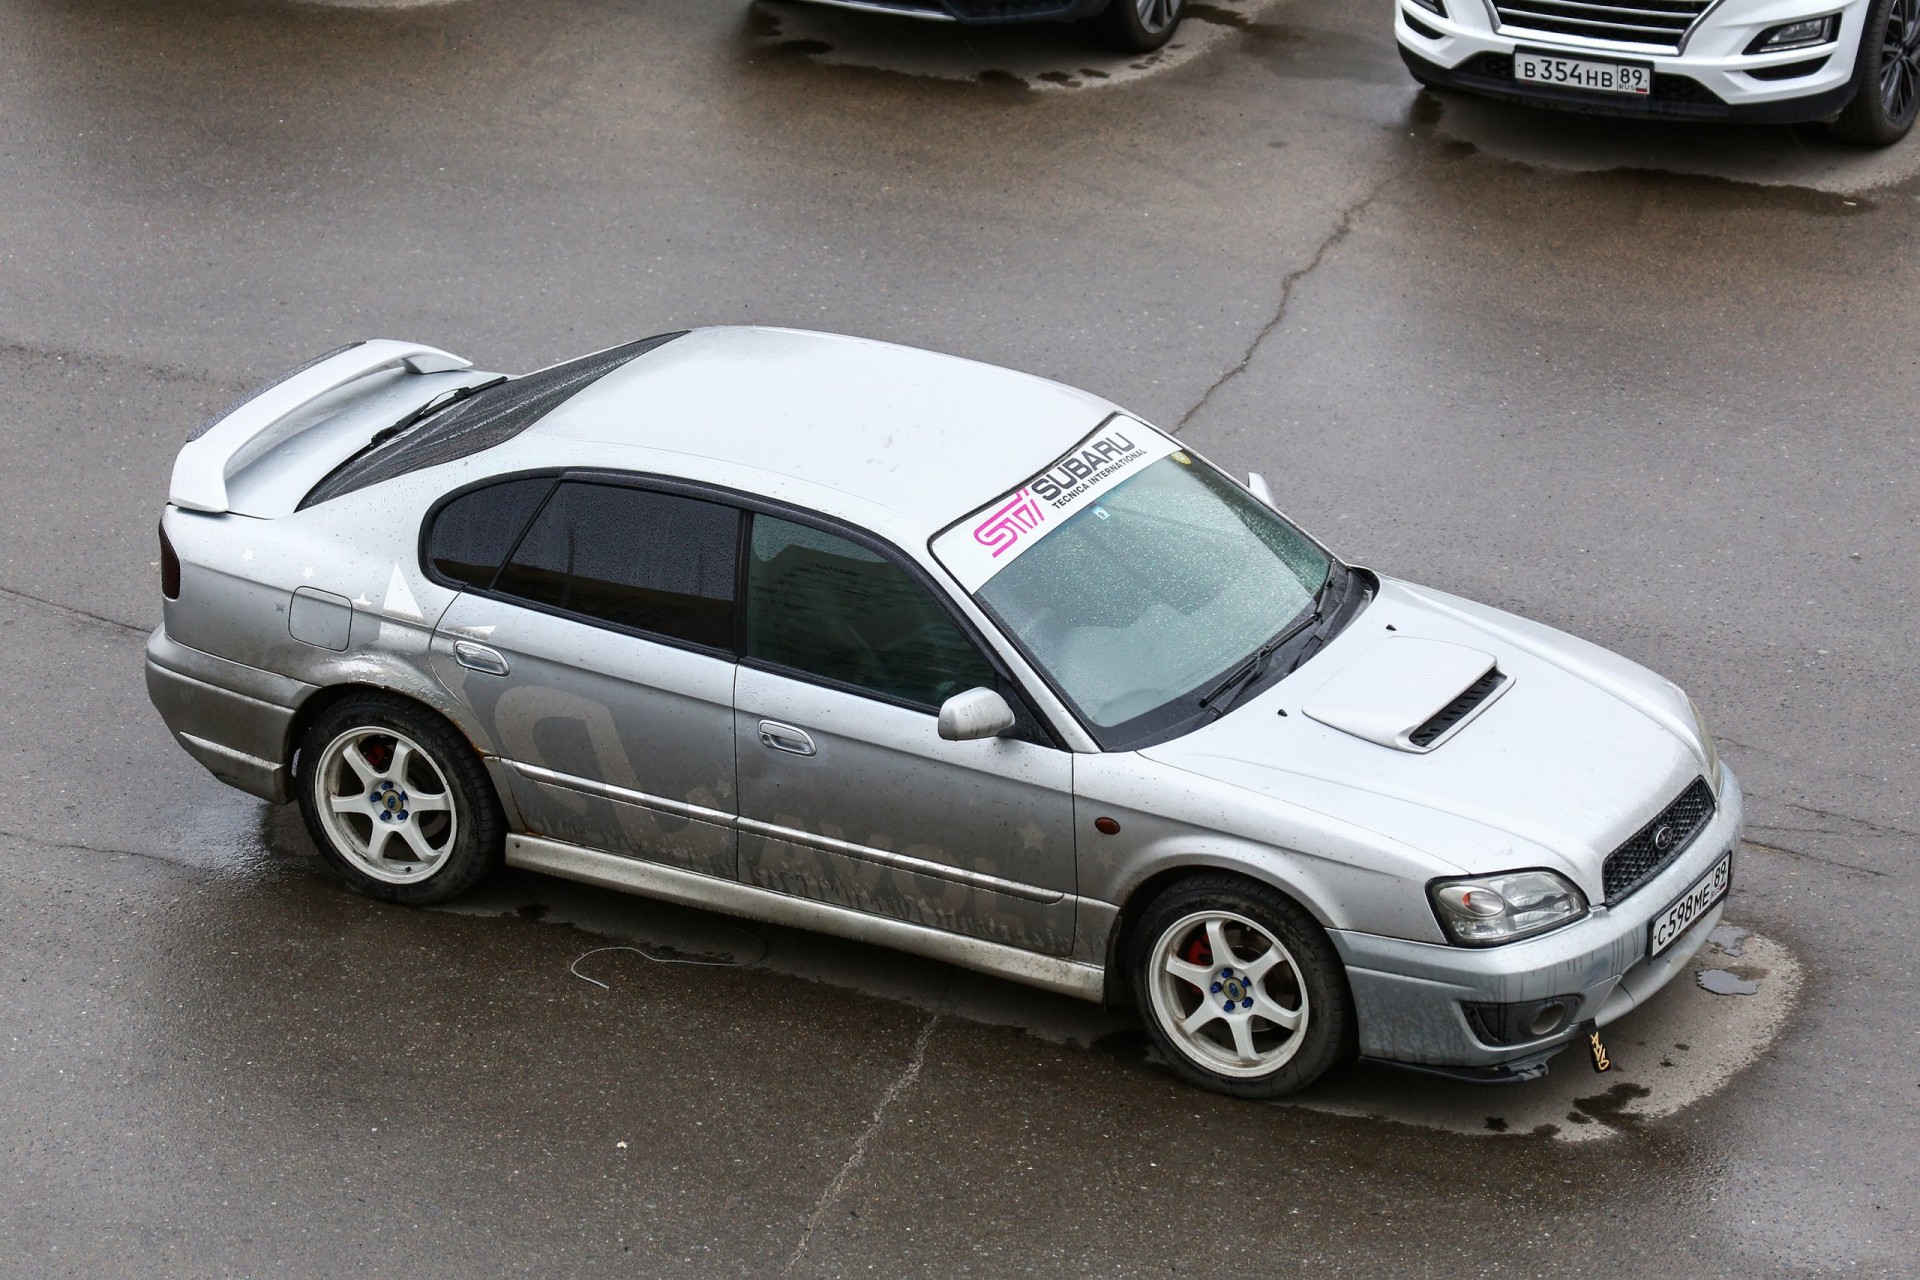 2002 Grey Subaru Legacy in the city street.